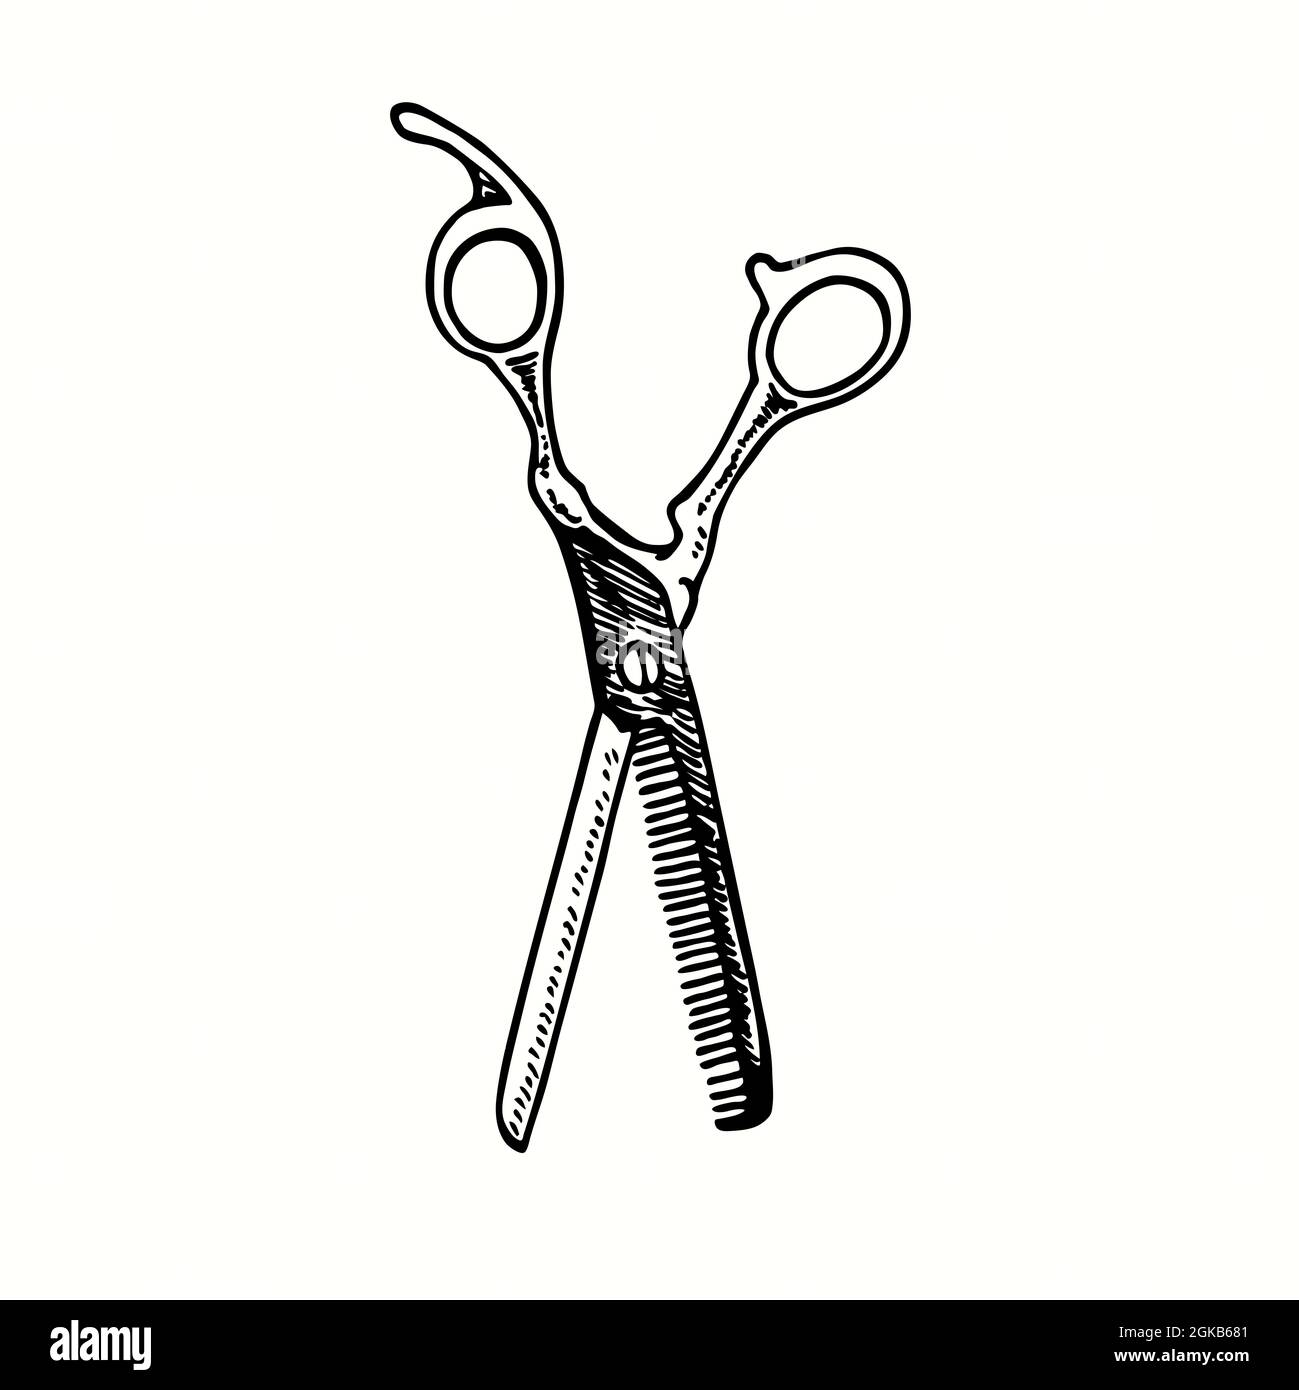 Scissors Sketch Hand Drawn in Doodle Style Vector Illustration Stock Vector  - Illustration of scissor, icon: 282642186